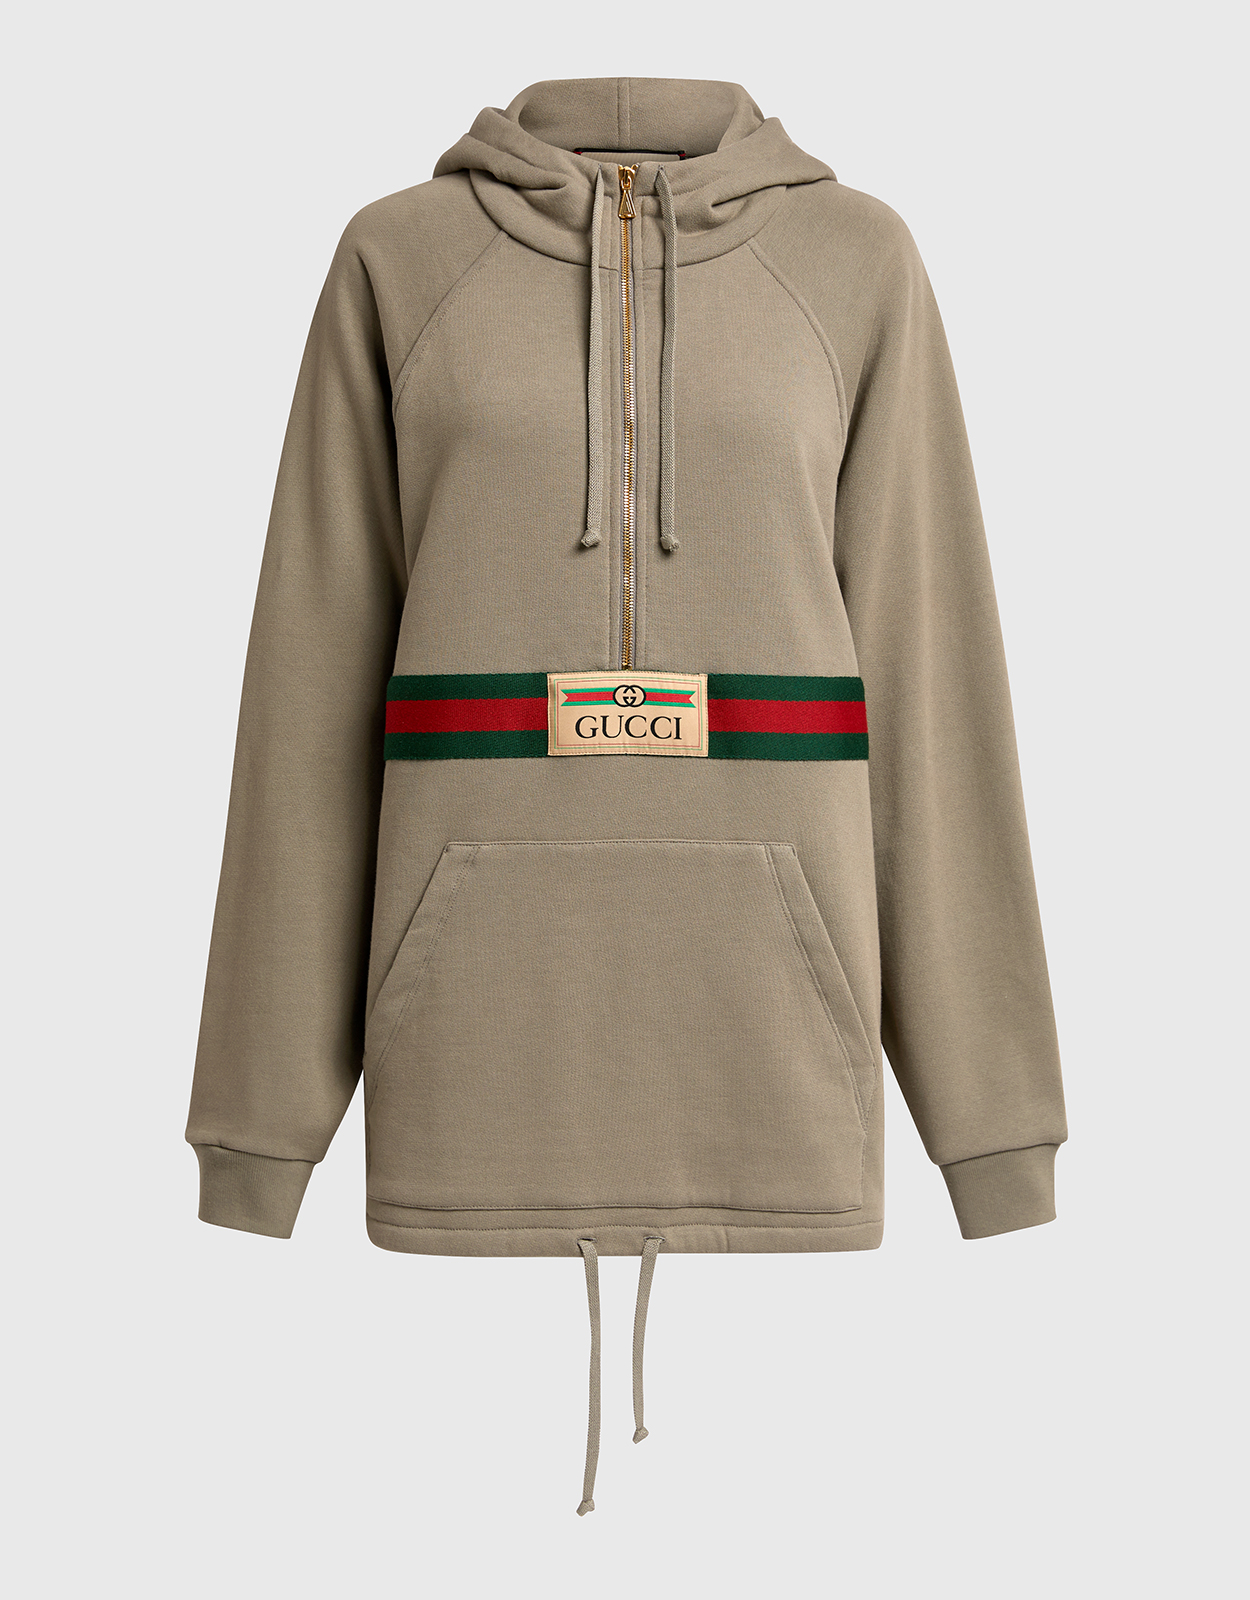 Gucci With Vintage Gucci Logo Cotton Hoodie (Tops,Sweatshirts) IFCHIC.COM